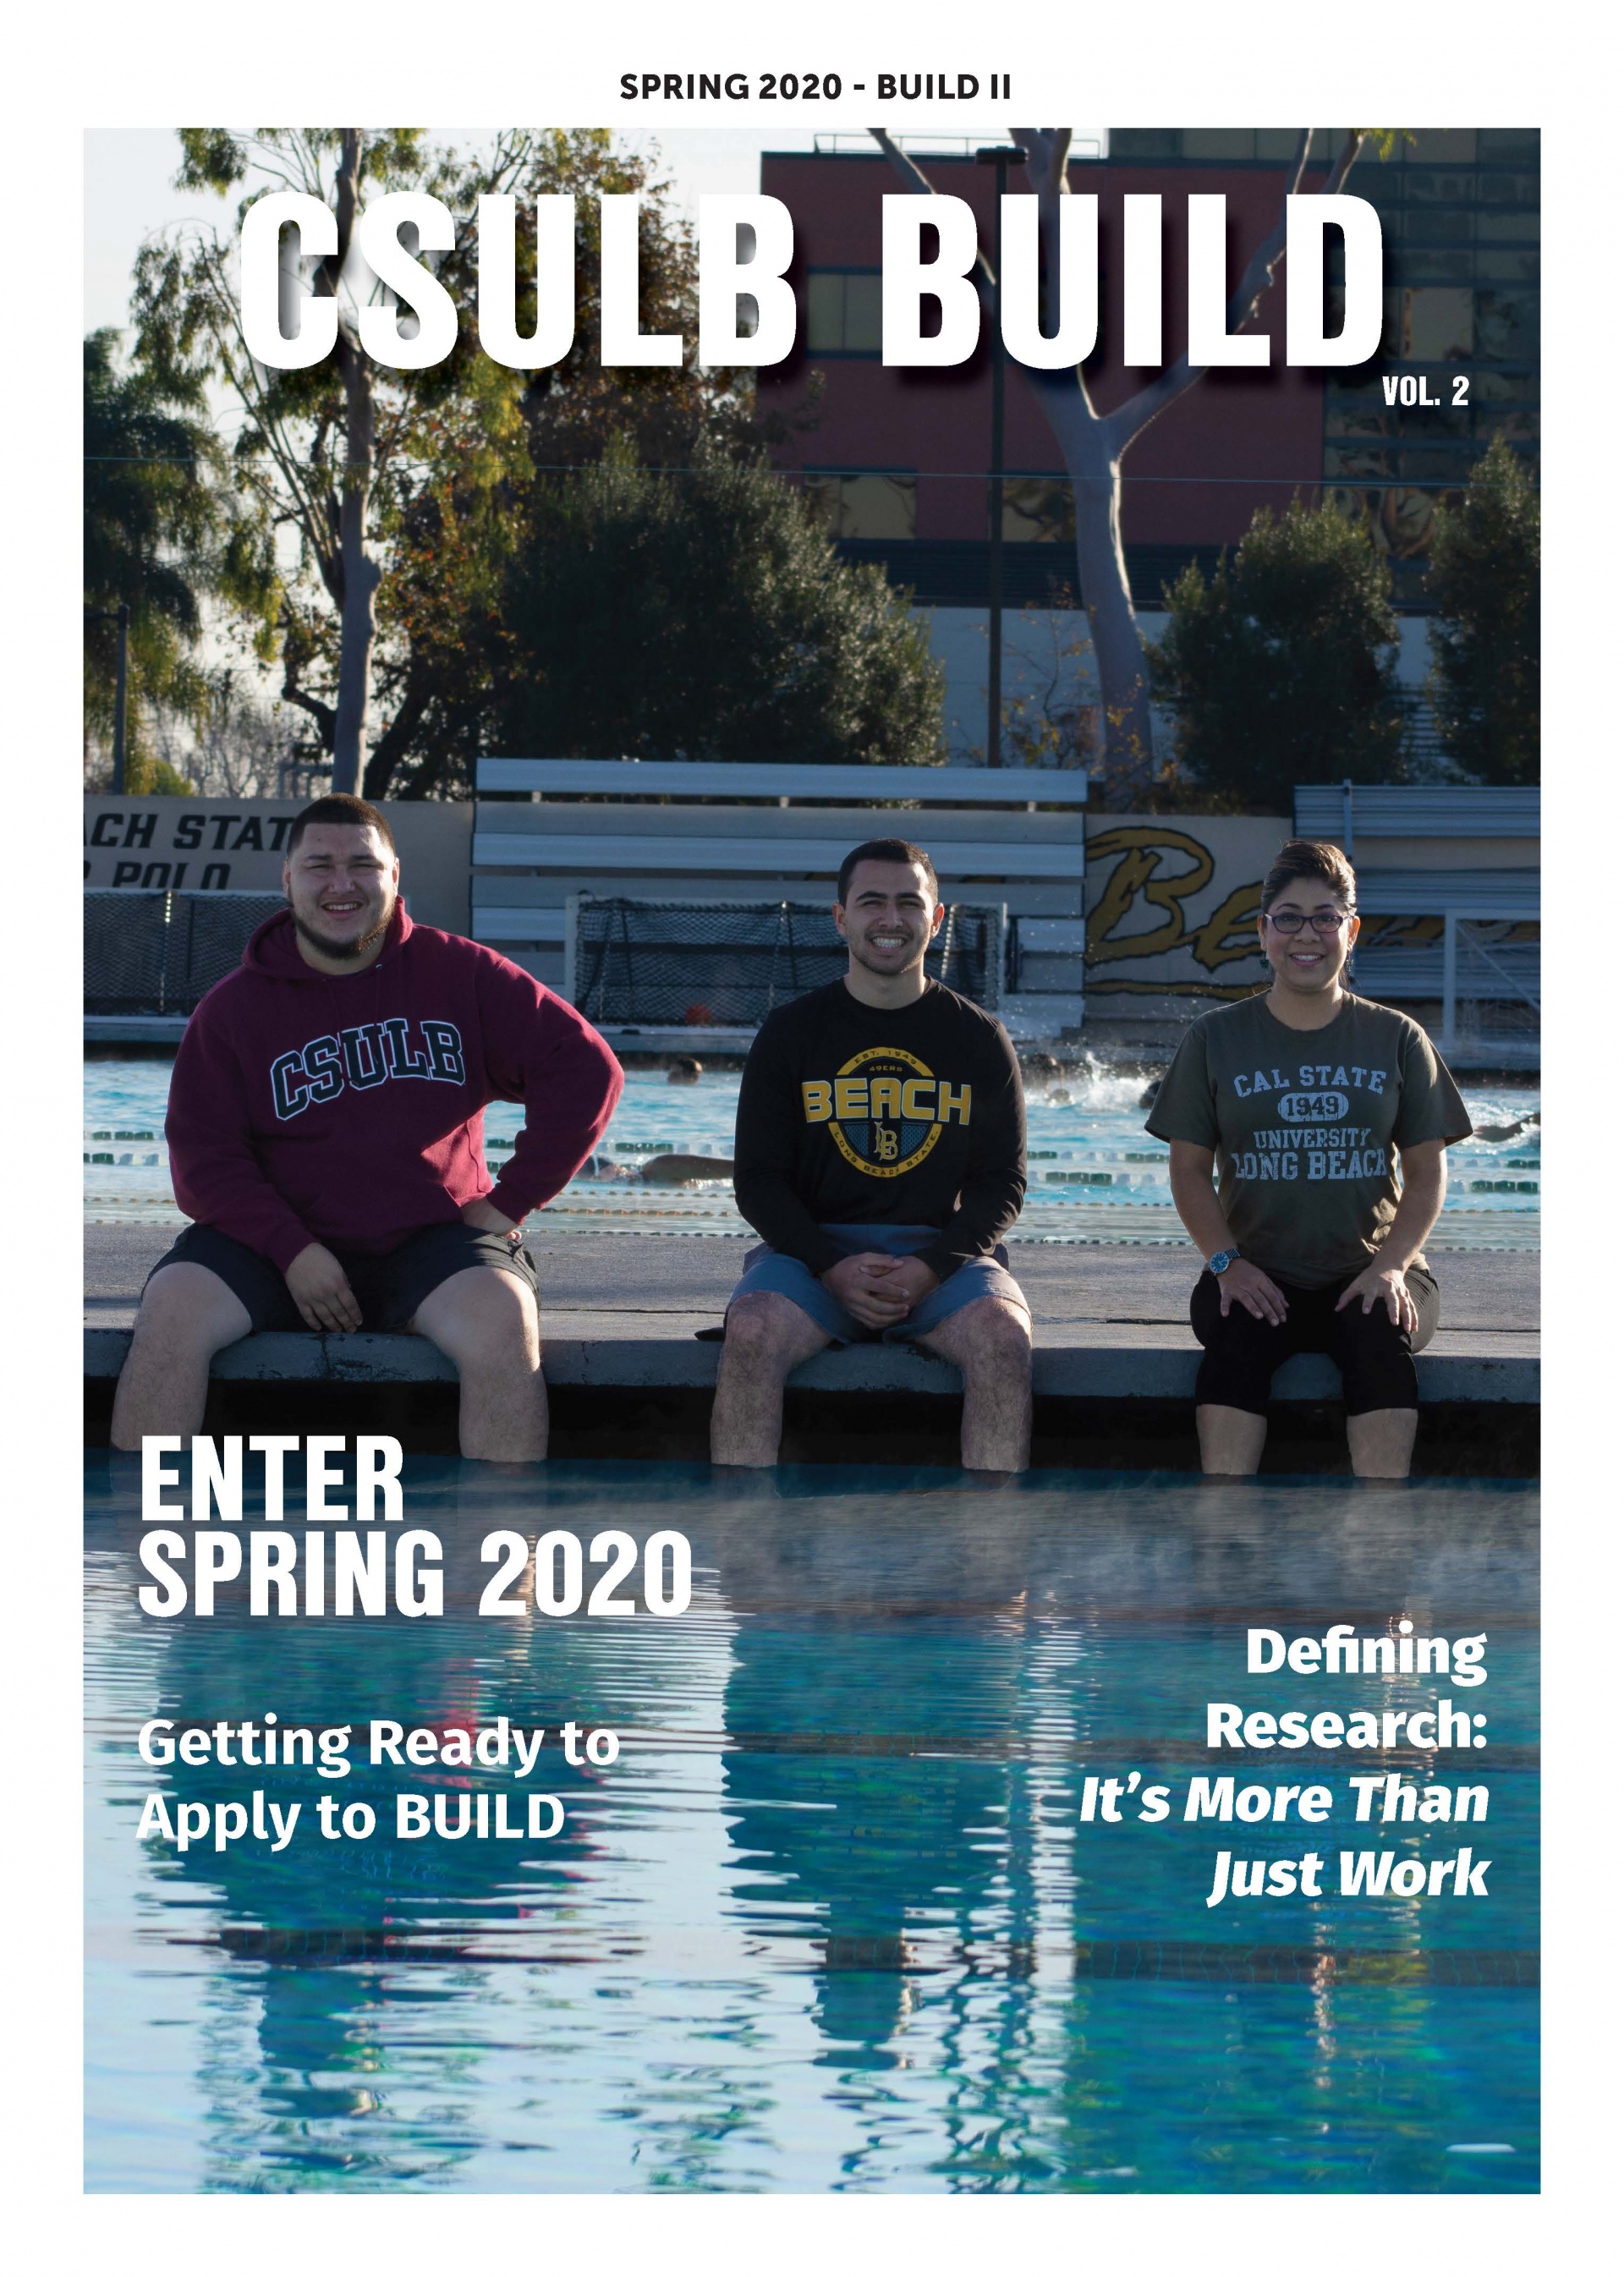 Spring 2020 BUILD Magazine Cover